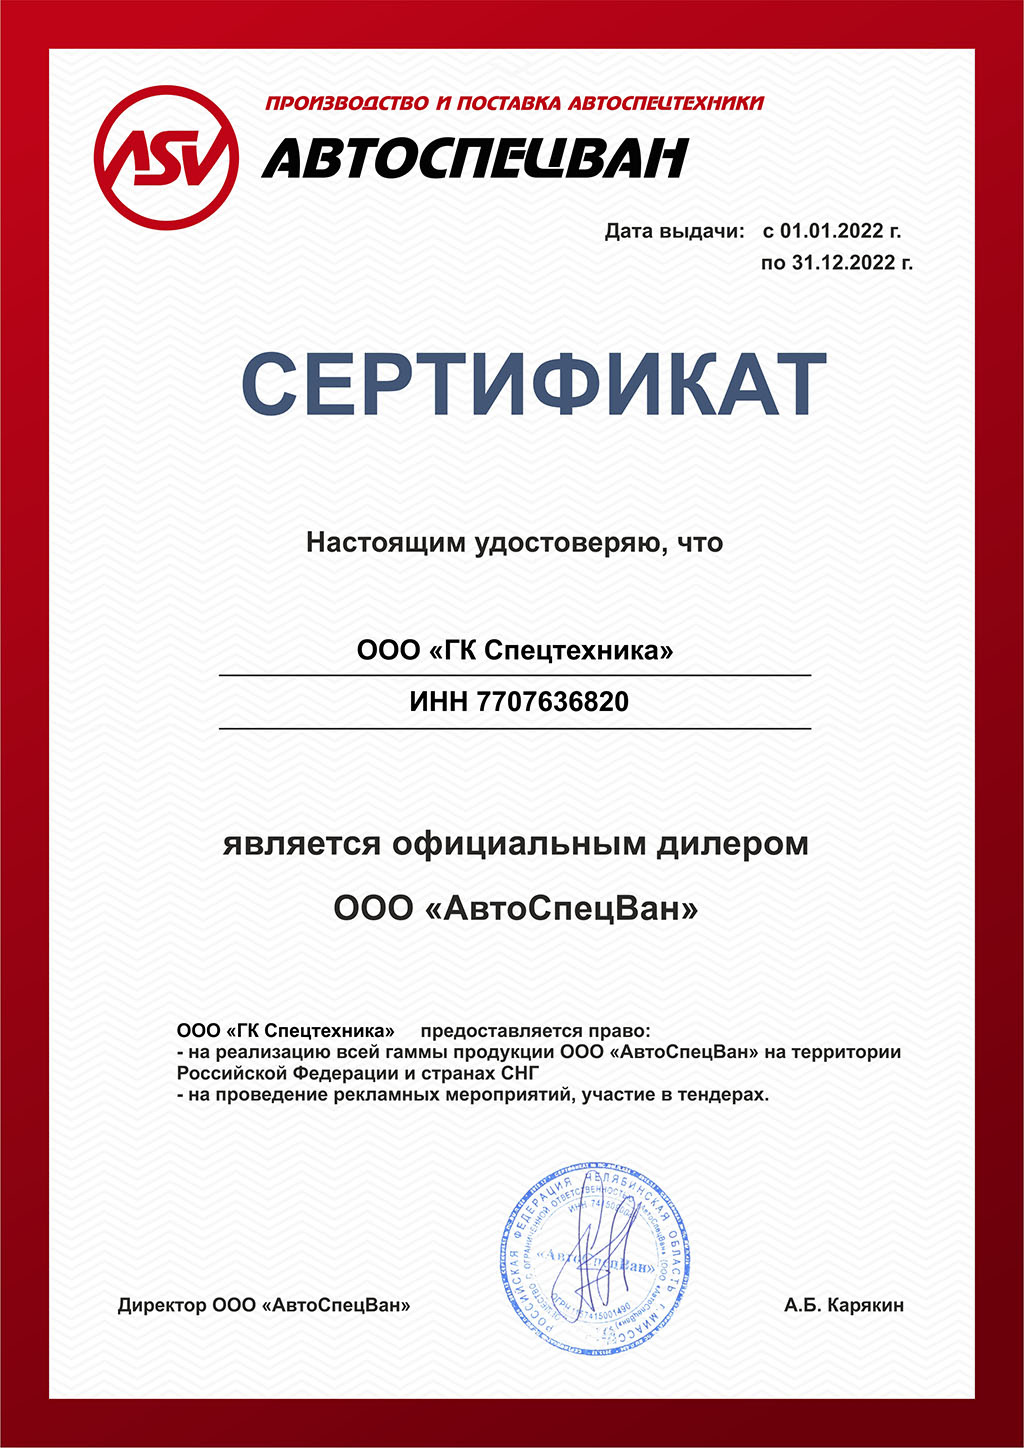 Сертификат дилера ООО «АвтоСпецВан»  от 2022 г.